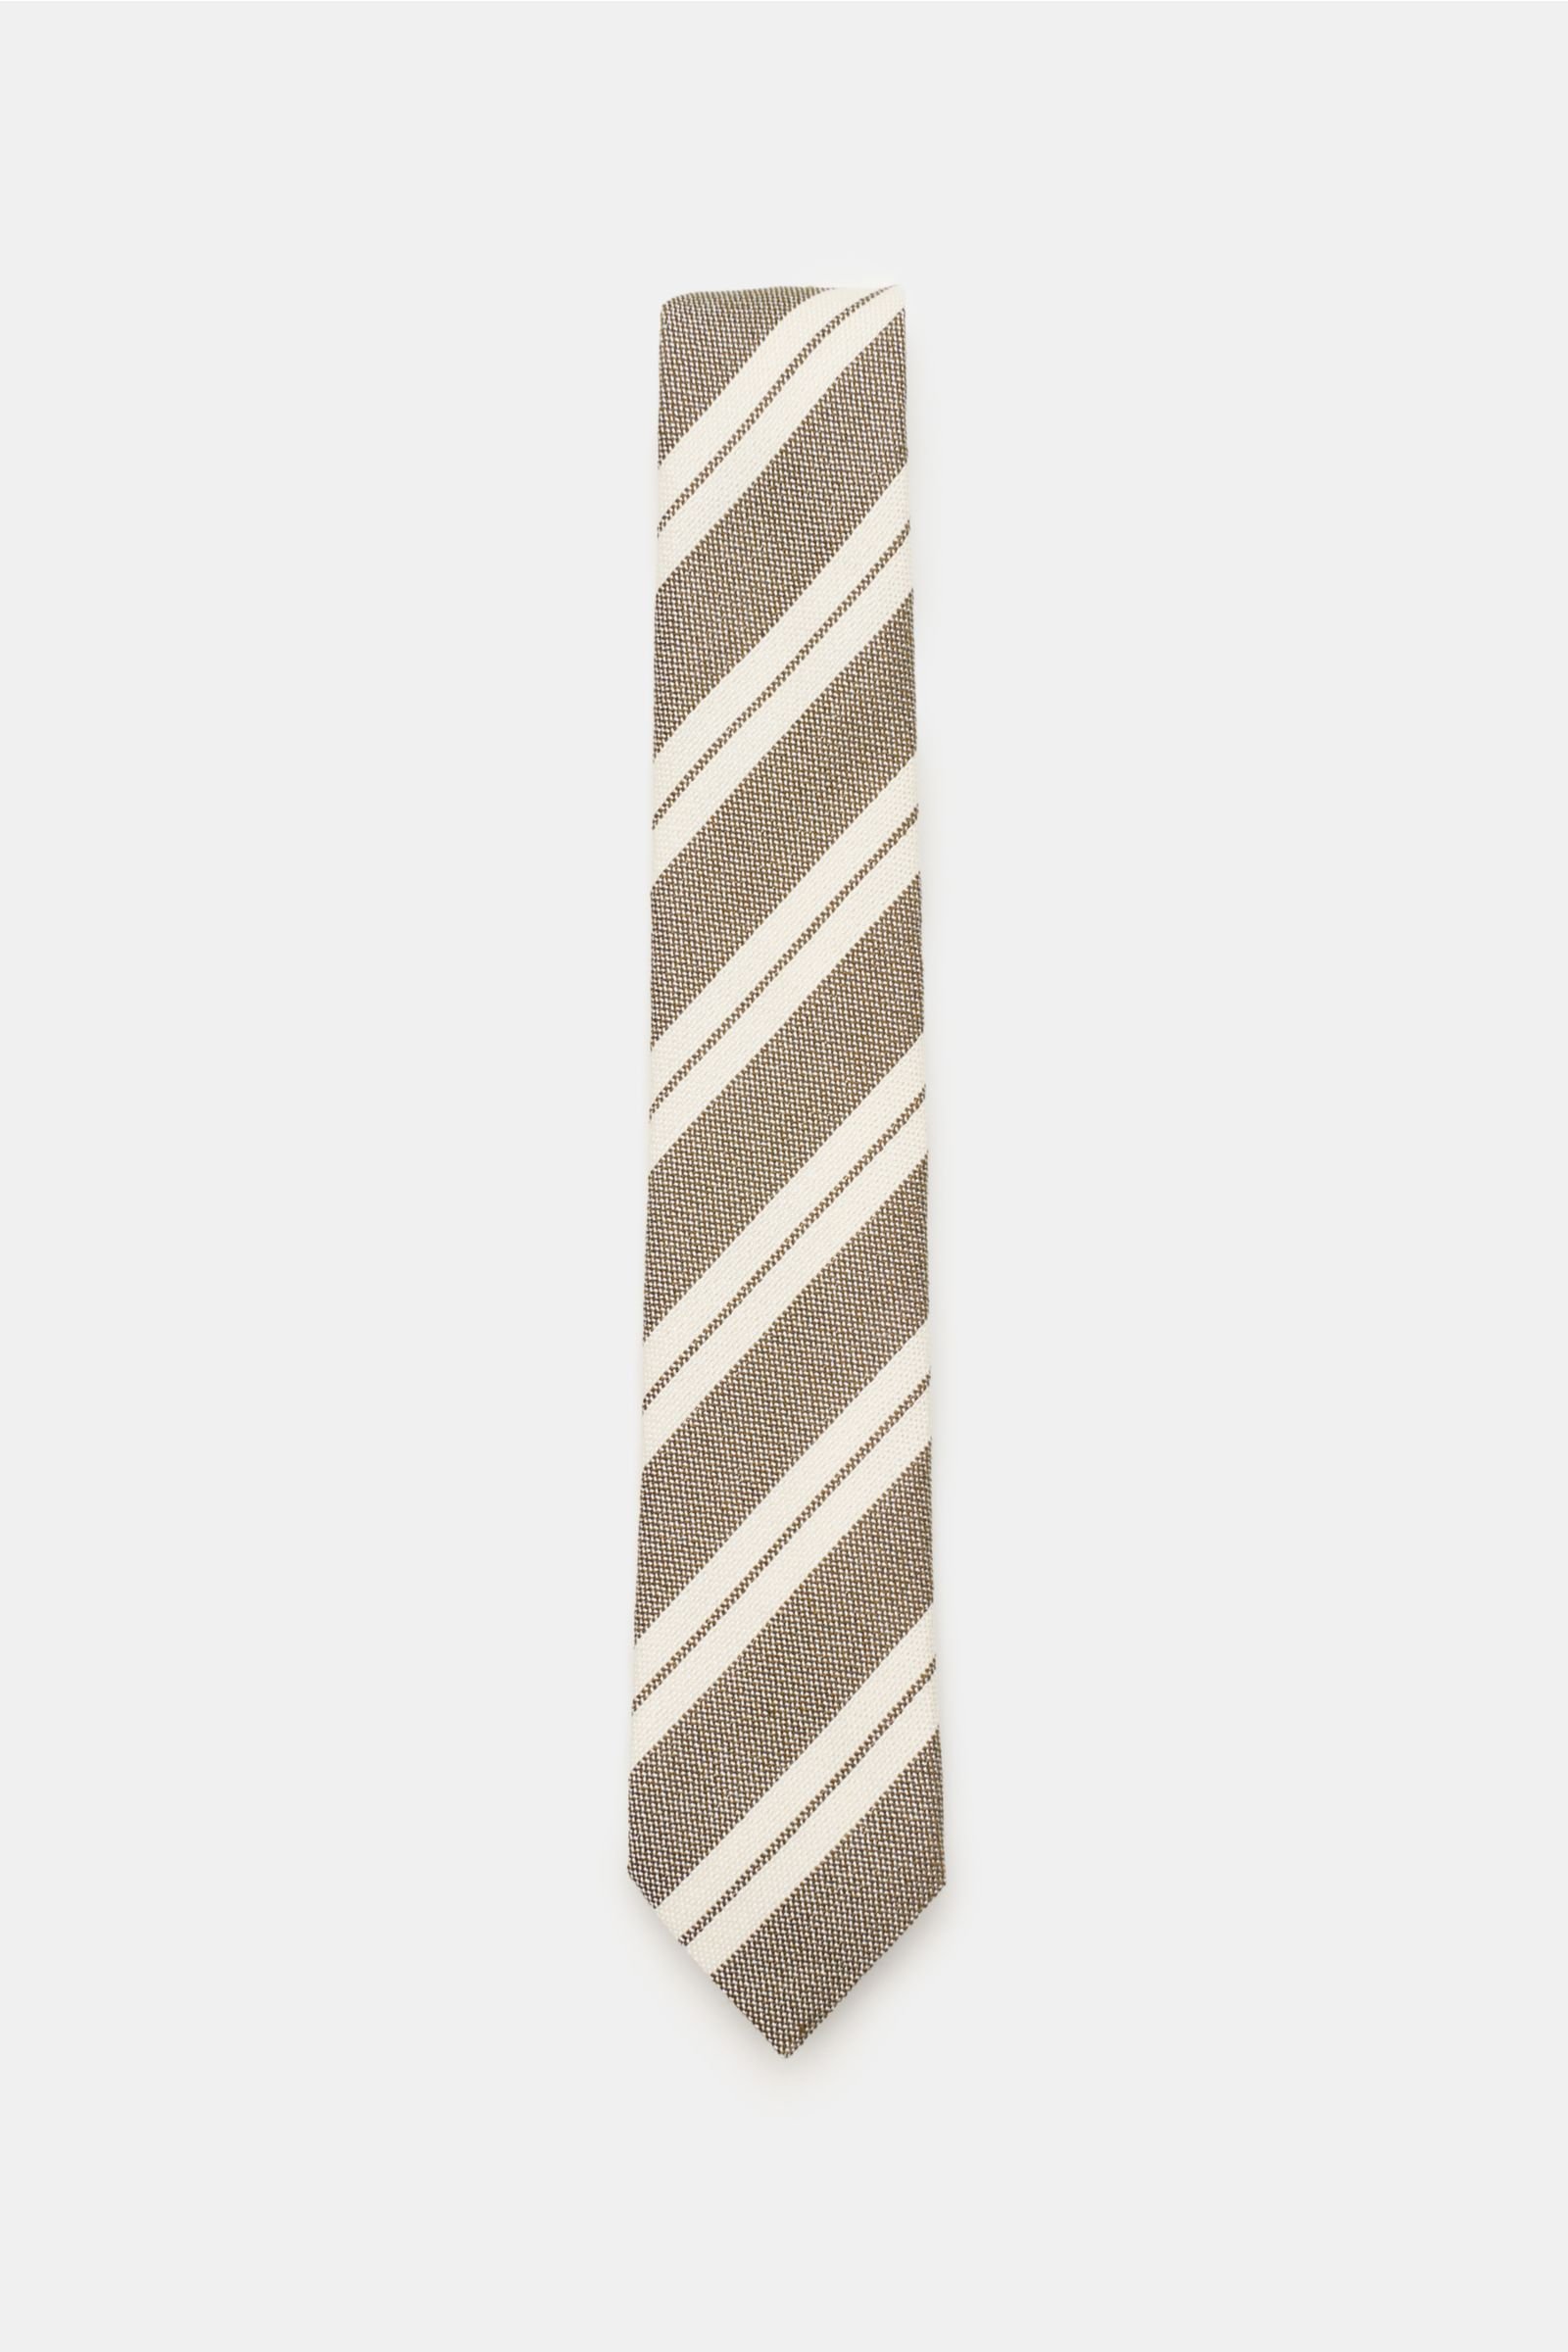 Tie grey-green/cream striped